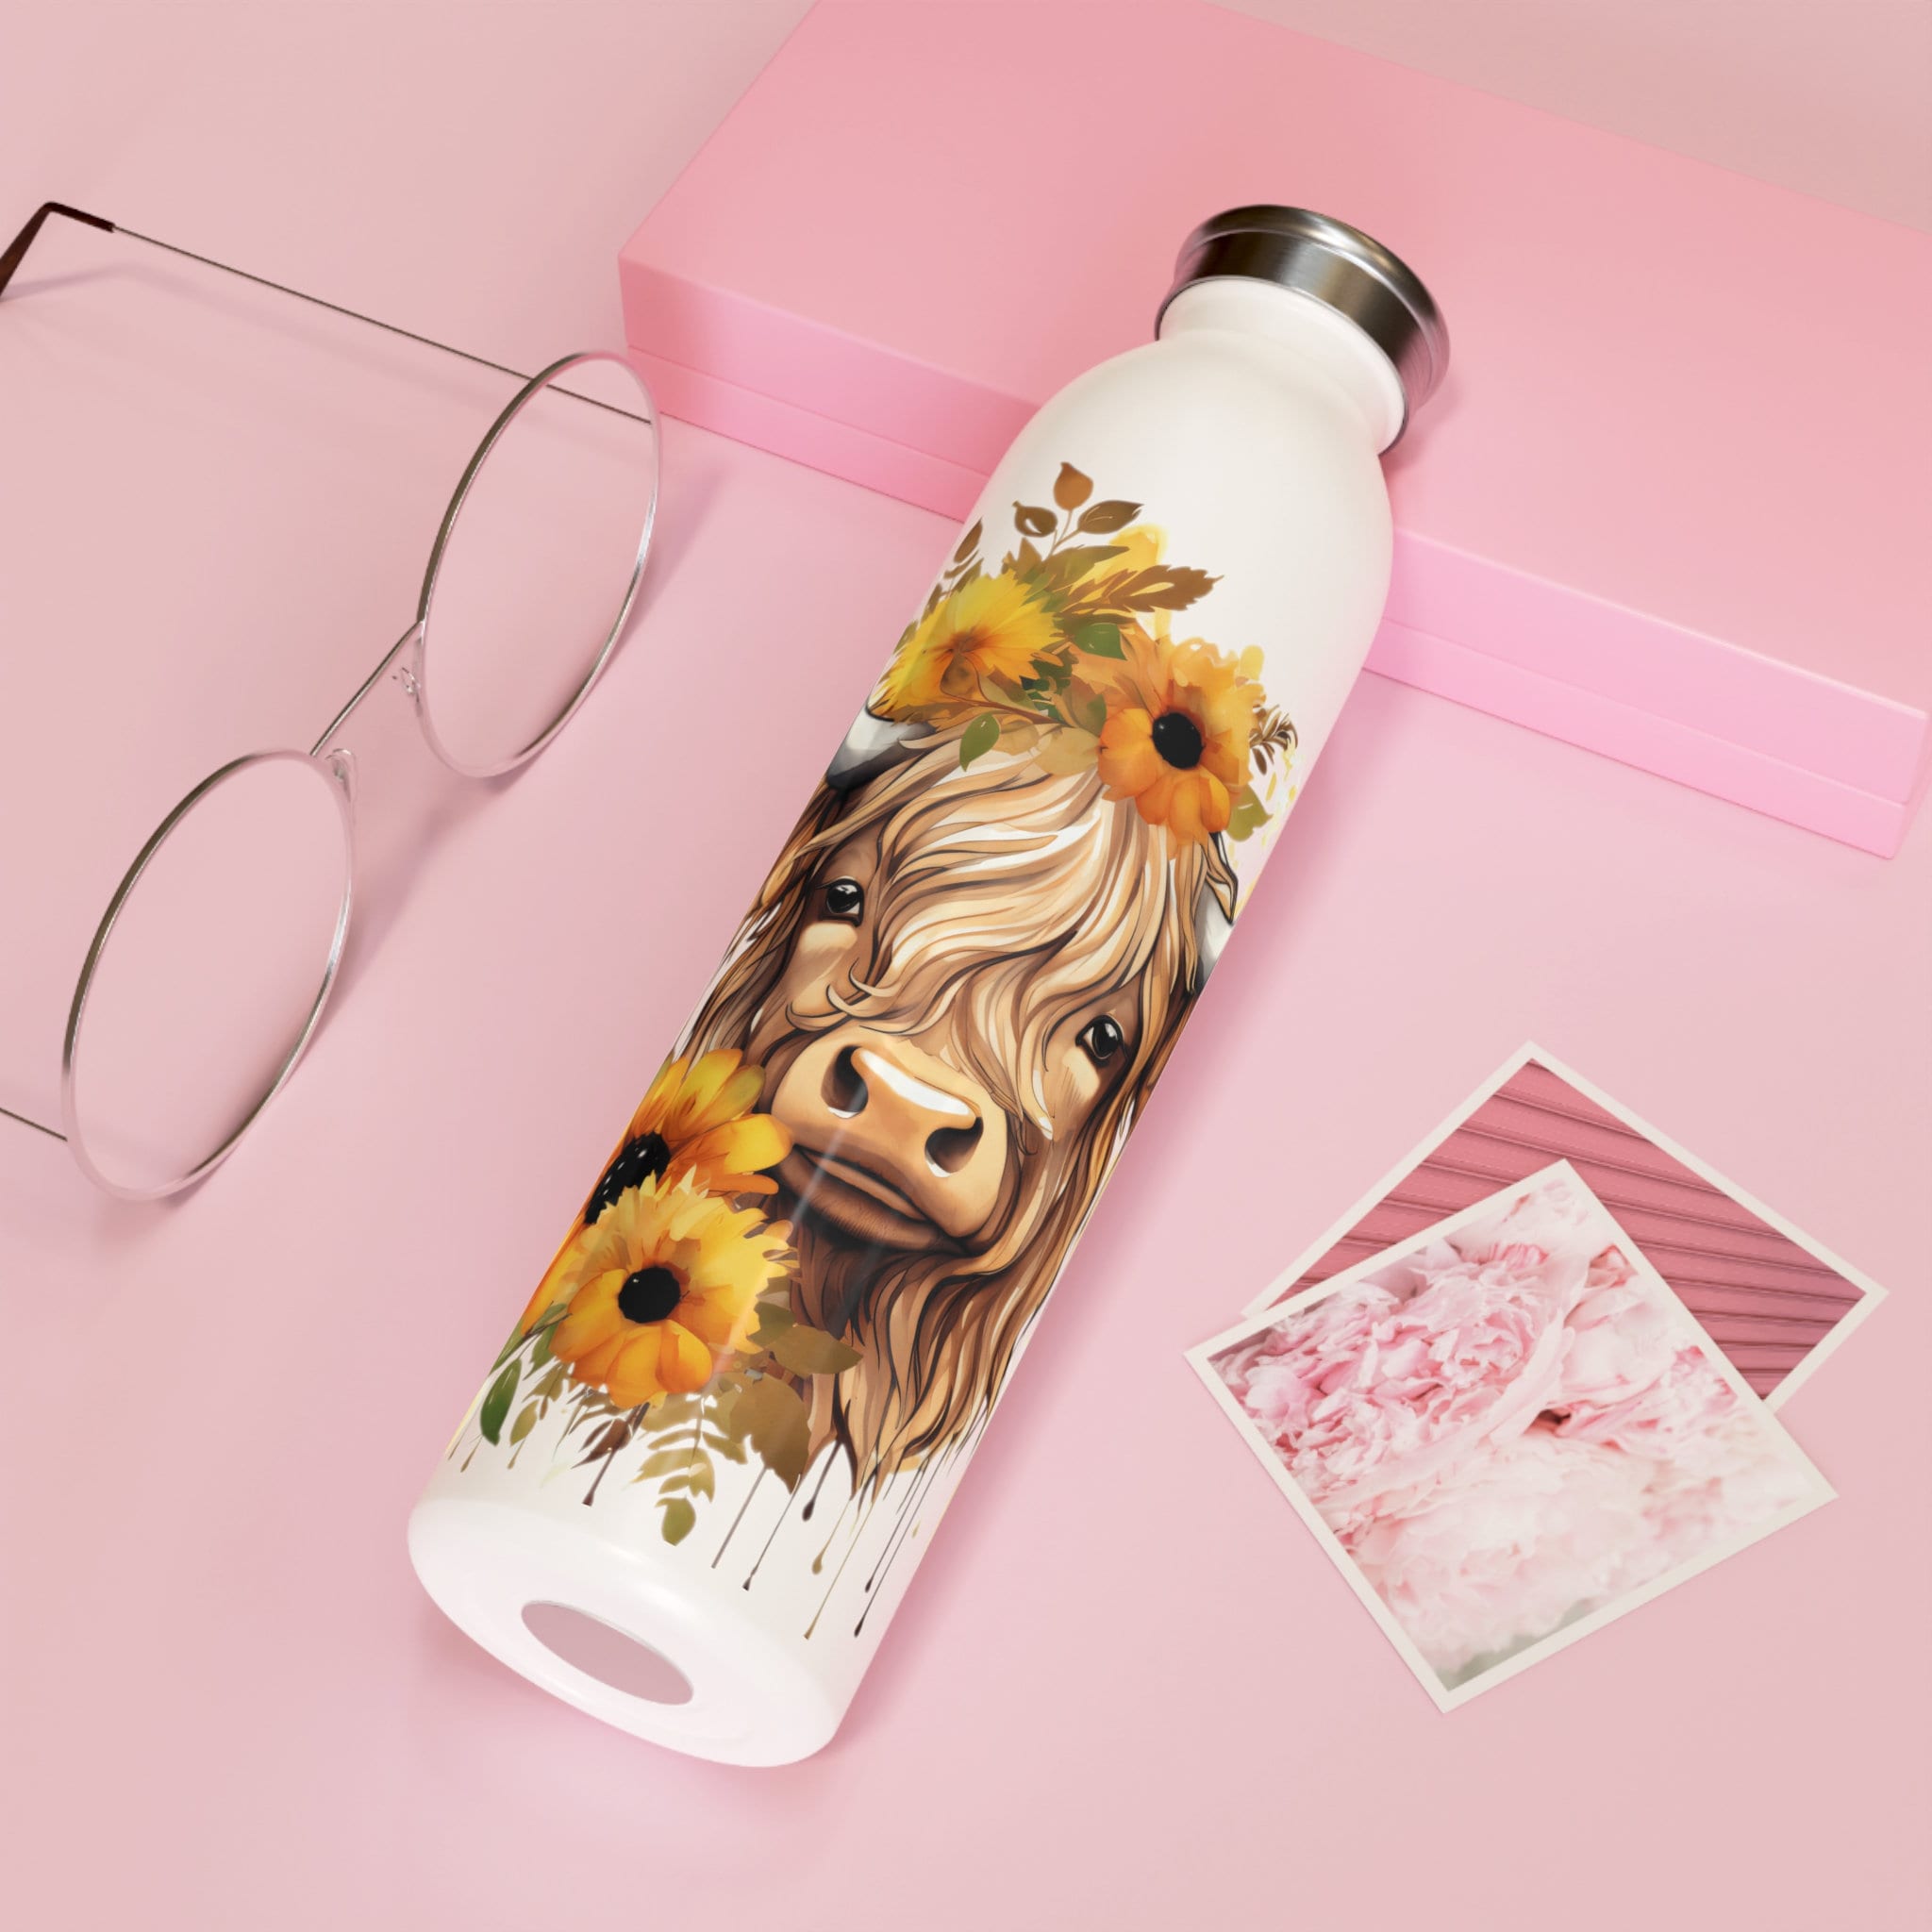 Clear Plastic Sun Tea Jar Beverage Dispenser 1.2 Gallon Pink Fruit Print  Jug